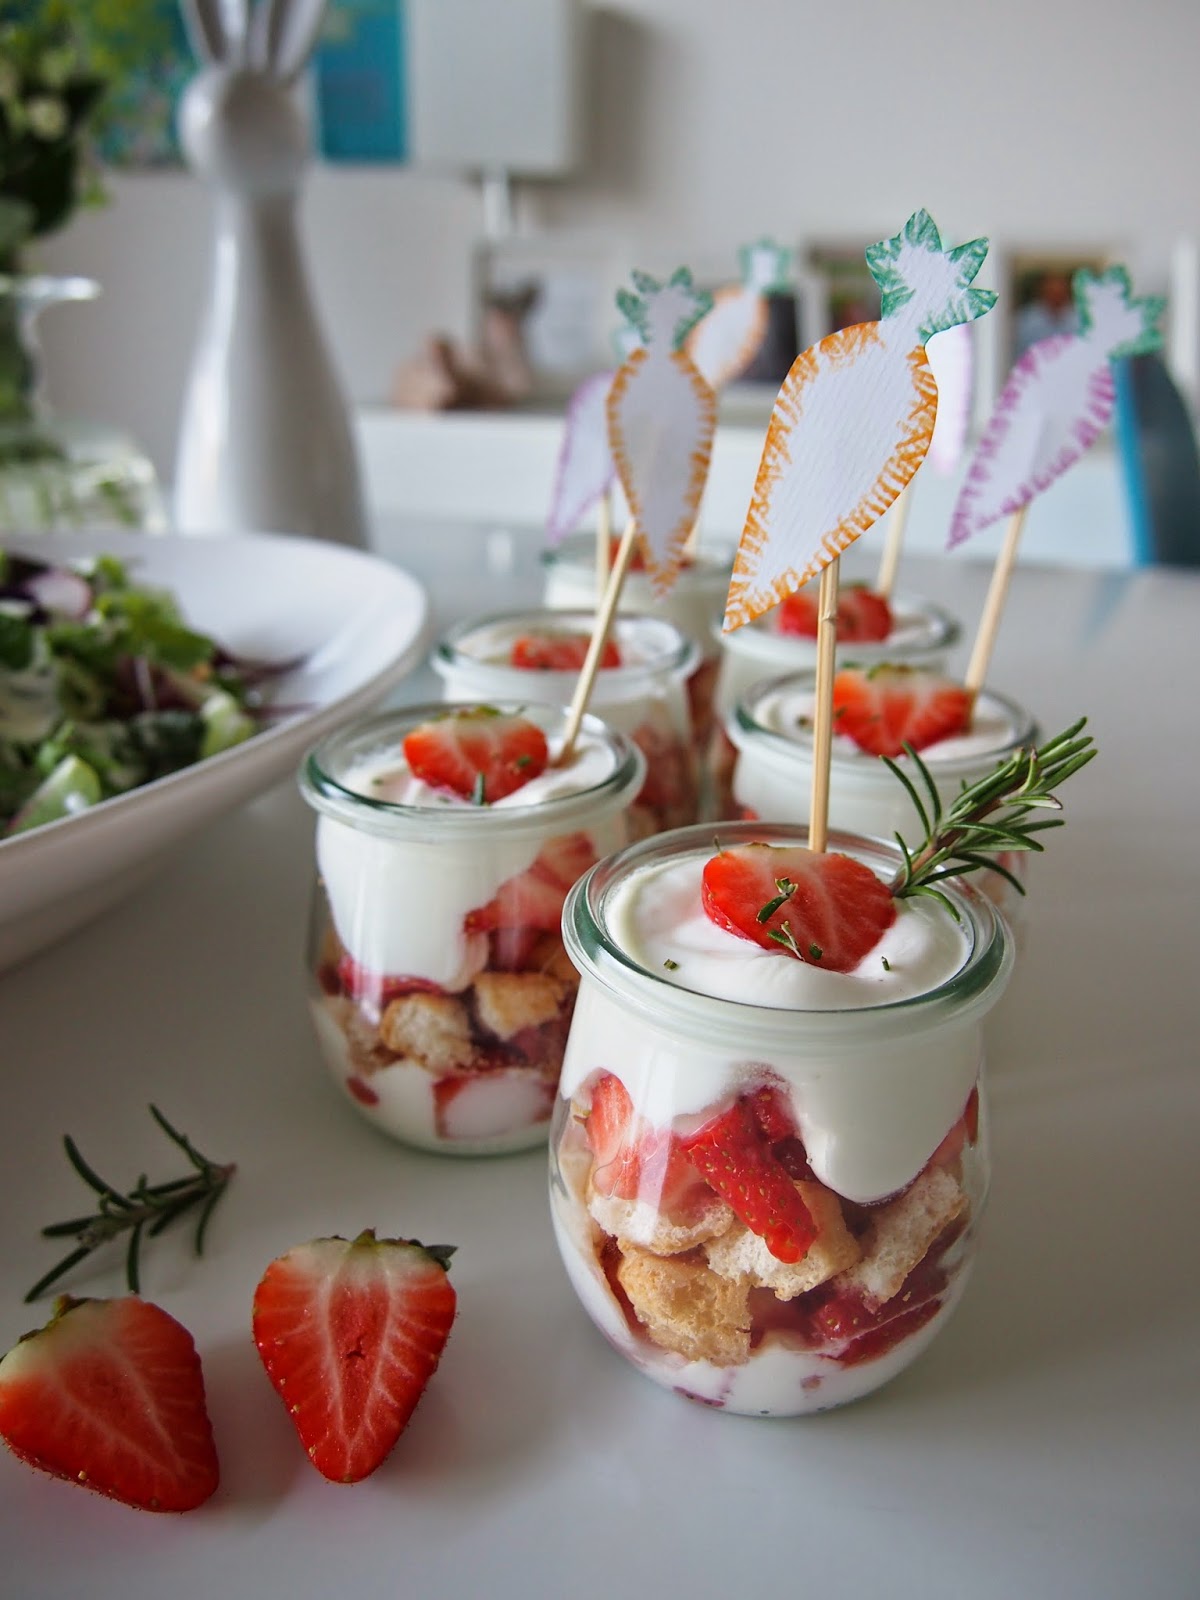 dieZuckerbäckerei: Erdbeer-Prosecco-Rosmarin-Dessert